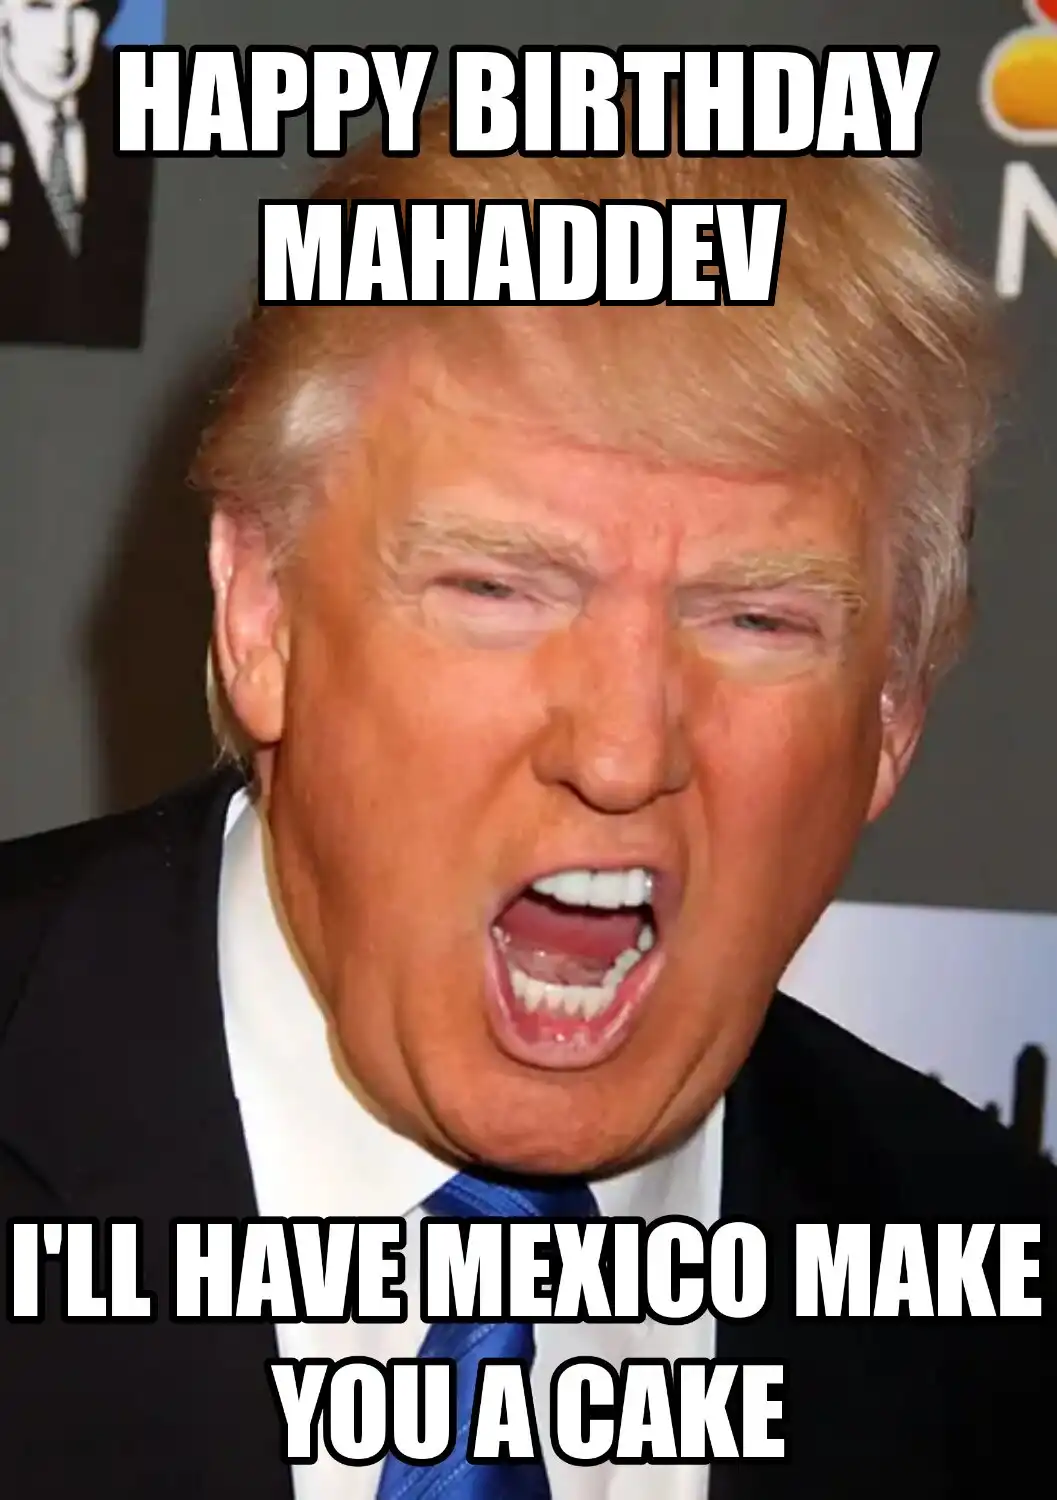 Happy Birthday Mahaddev Mexico Make You A Cake Meme